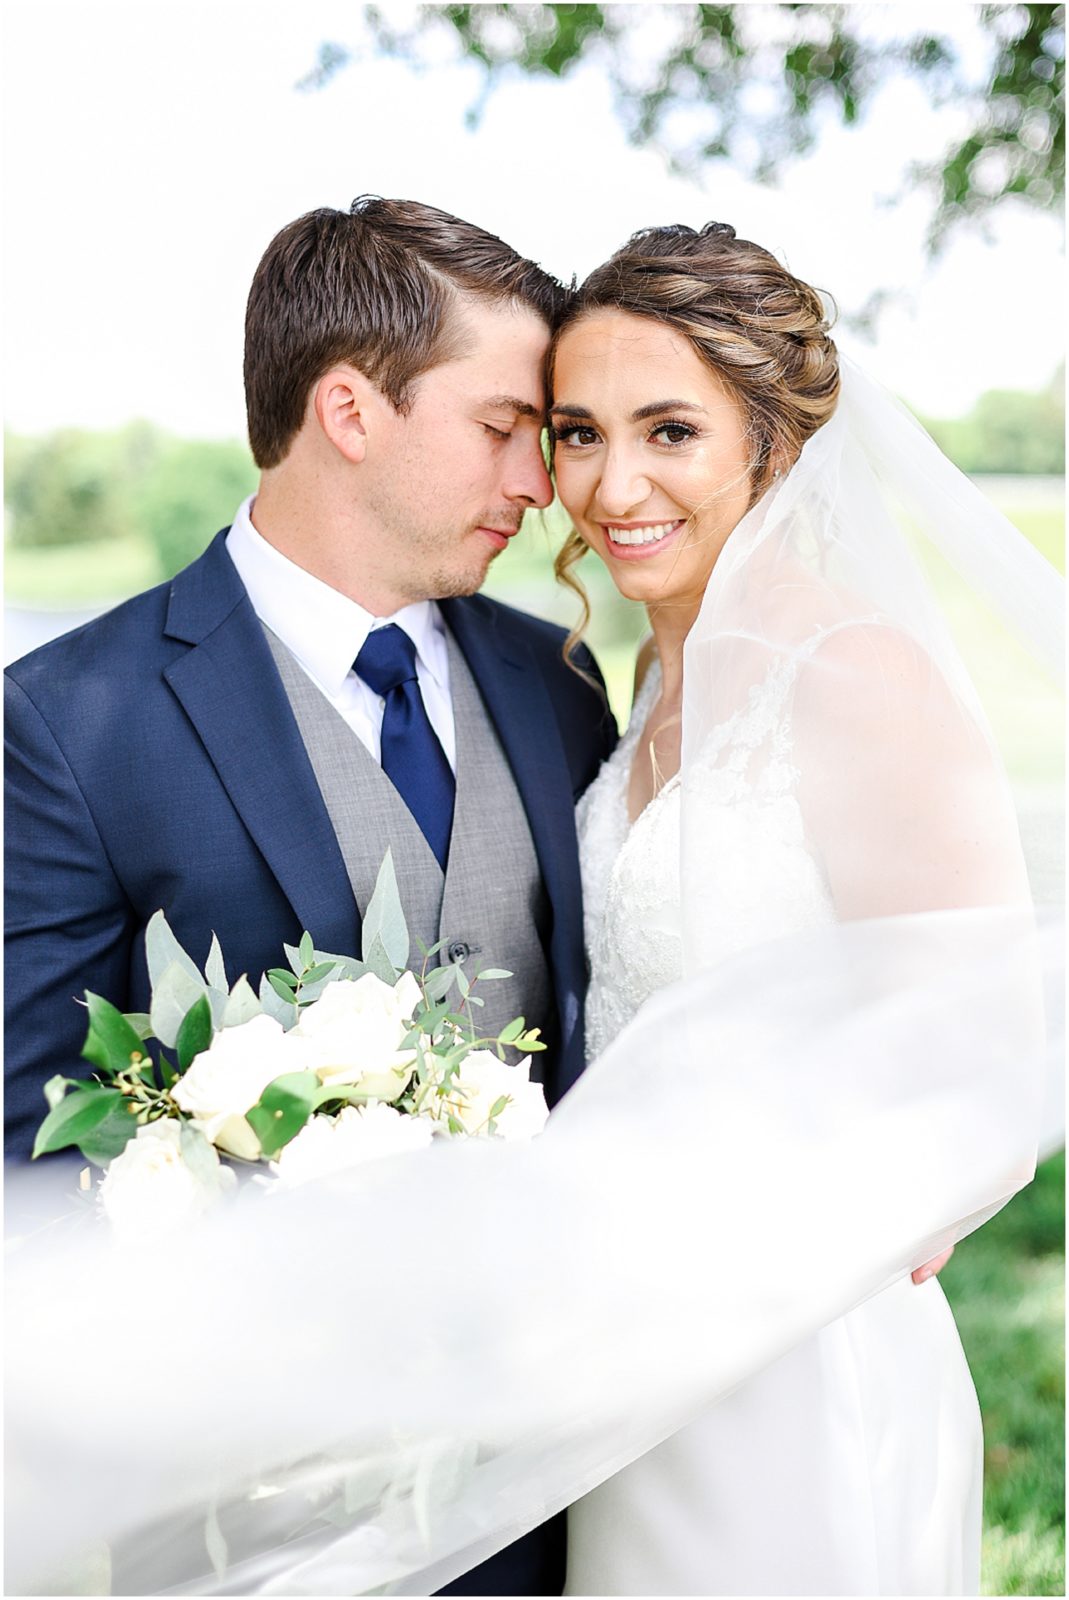 wedding veil photos - Kansas City Overland Park Wedding Photographer - Summer Wedding - Mildale Farms